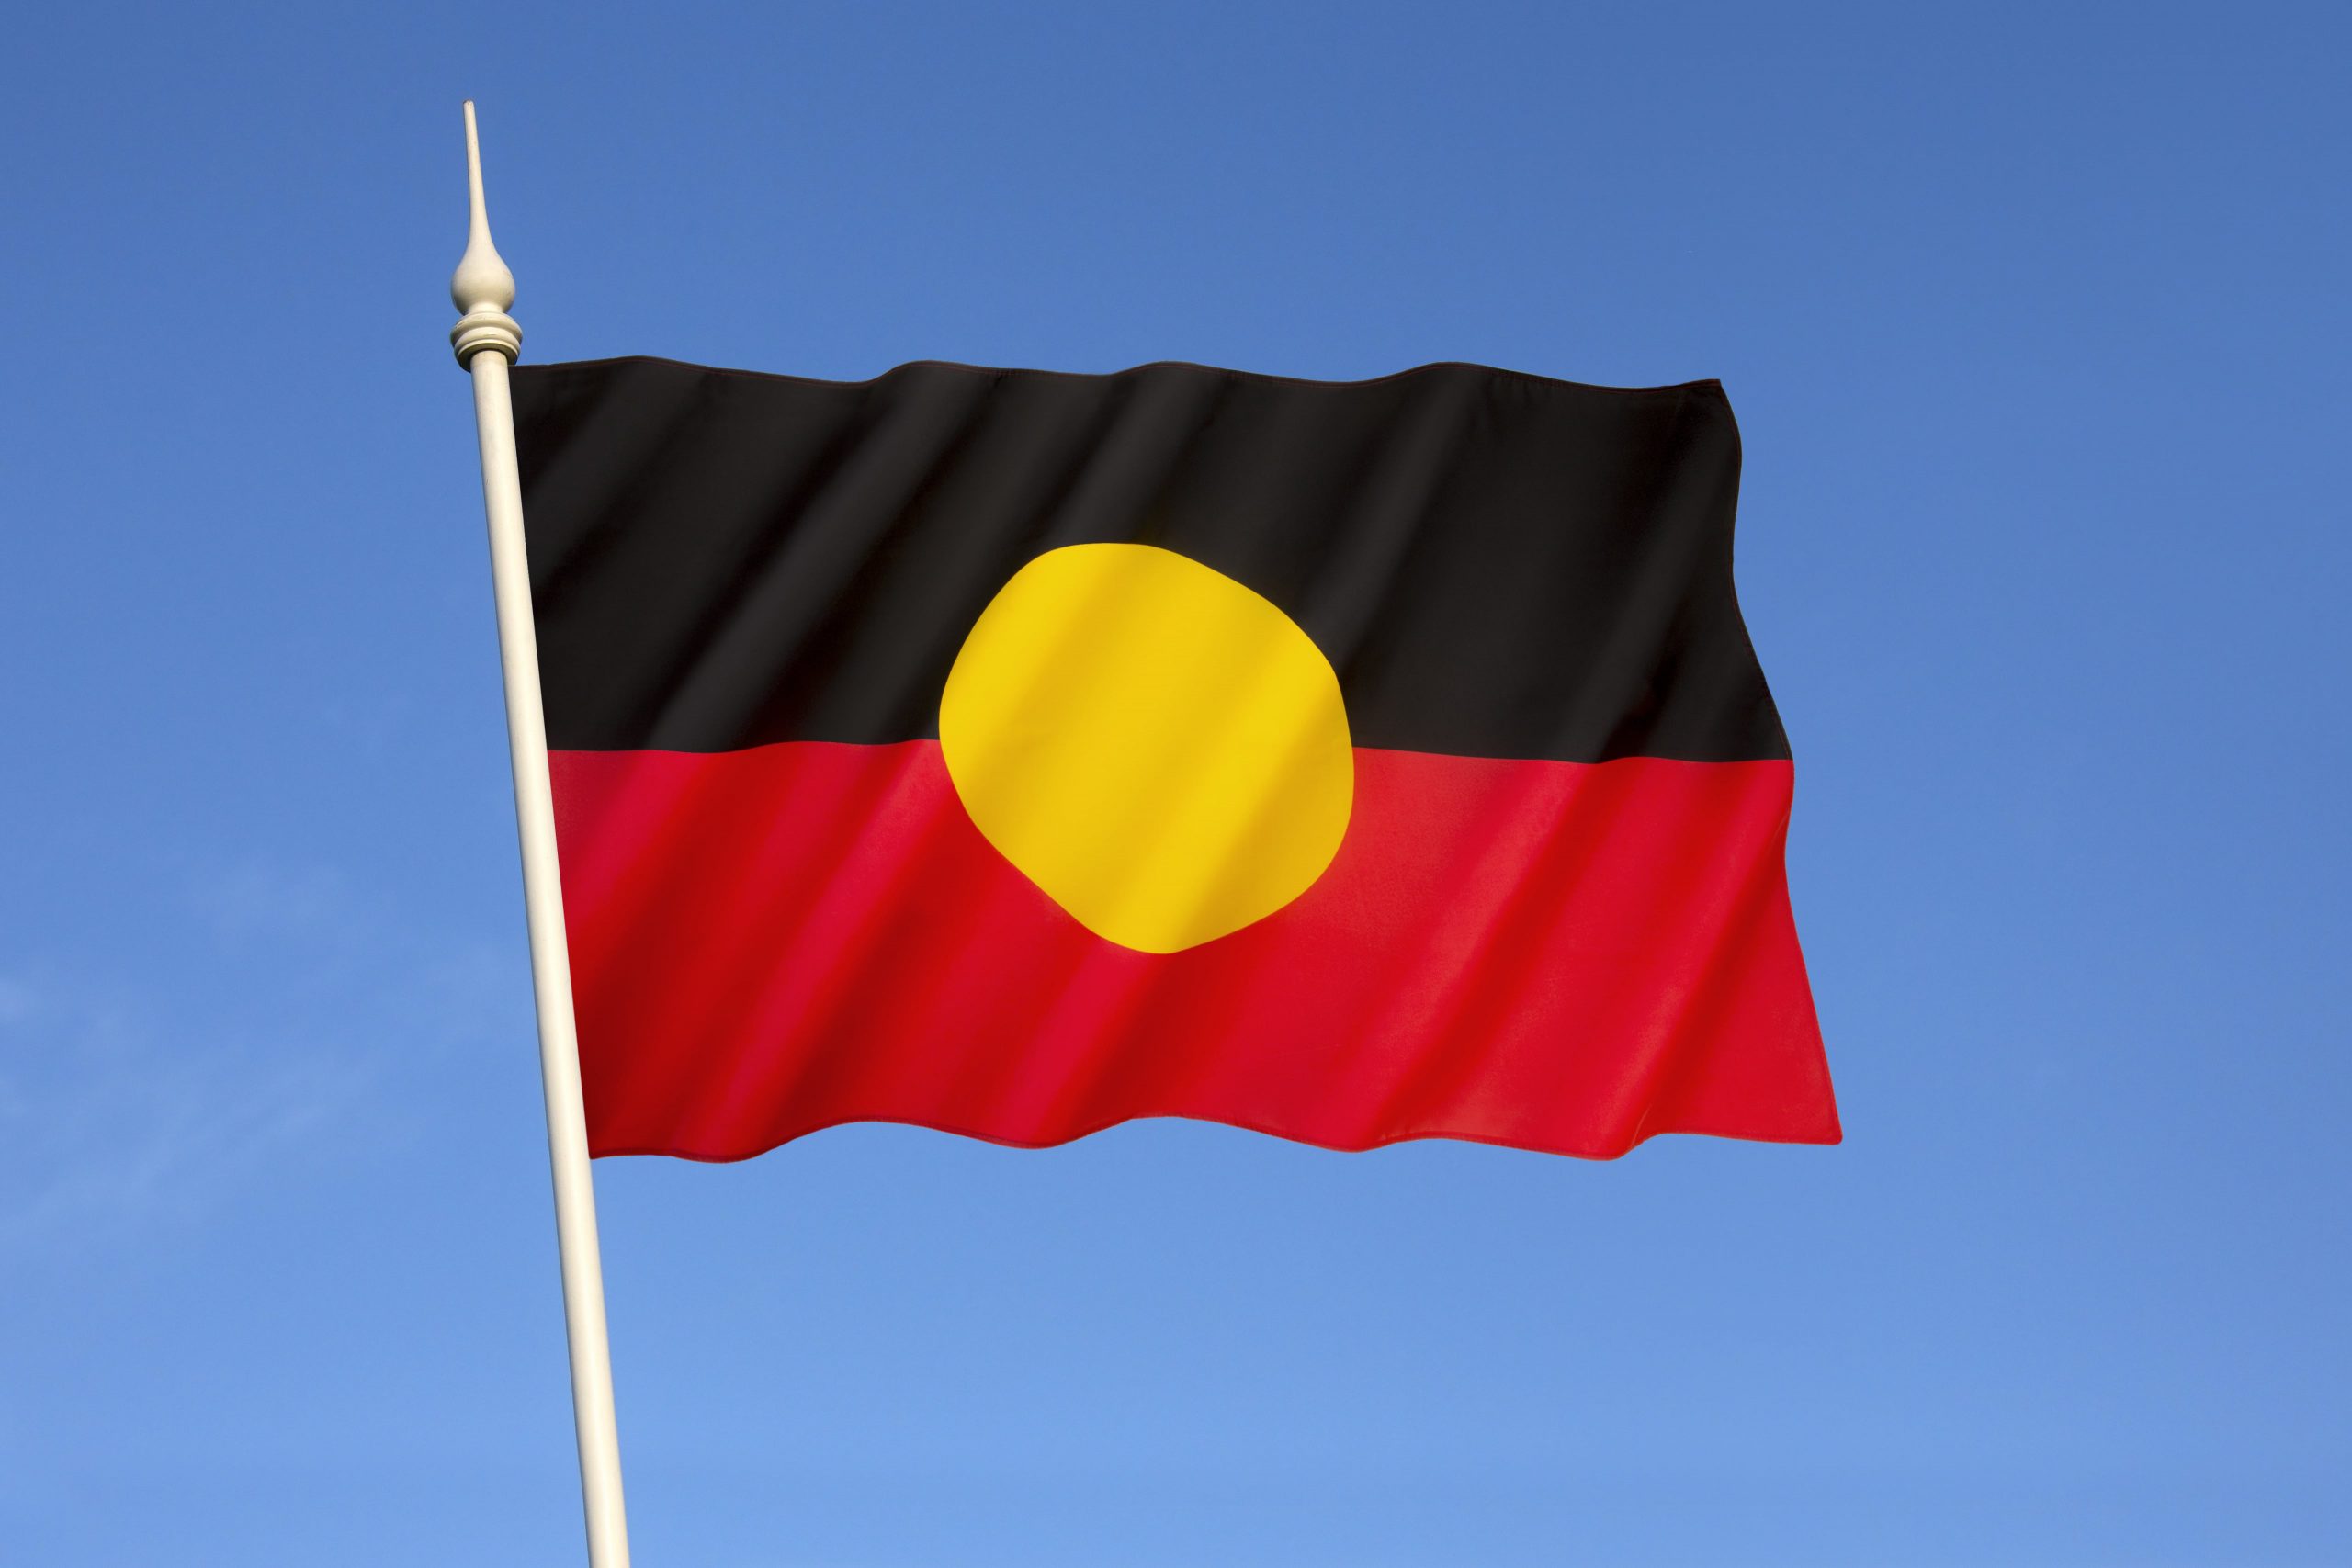 The Australian Aboriginal flag waving against a blue sky